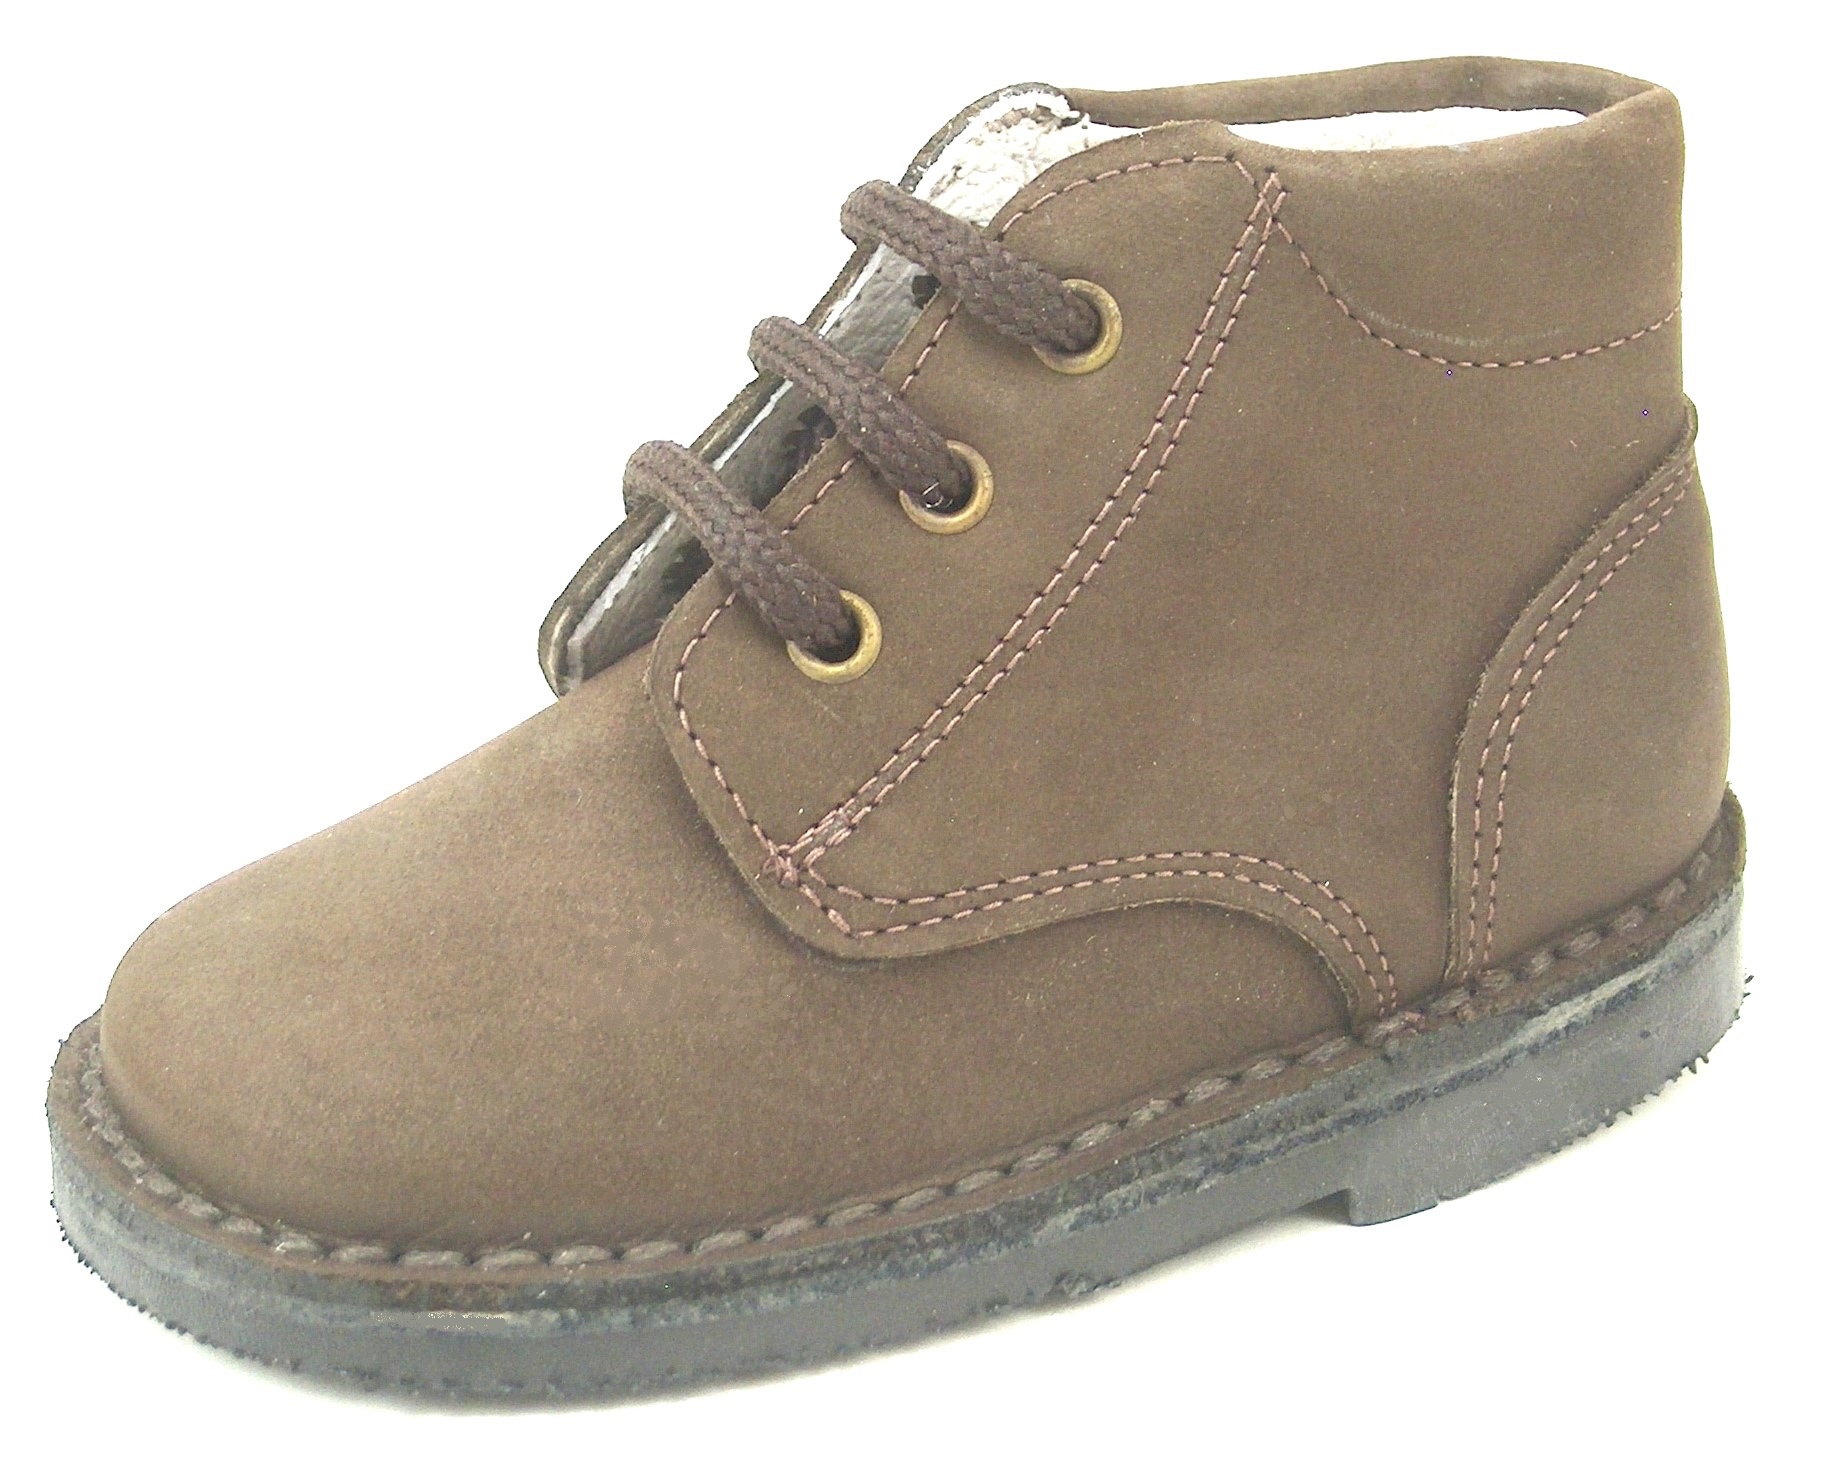 A-534 - Brown Chukka Boots - Euro 20 Size 4.5